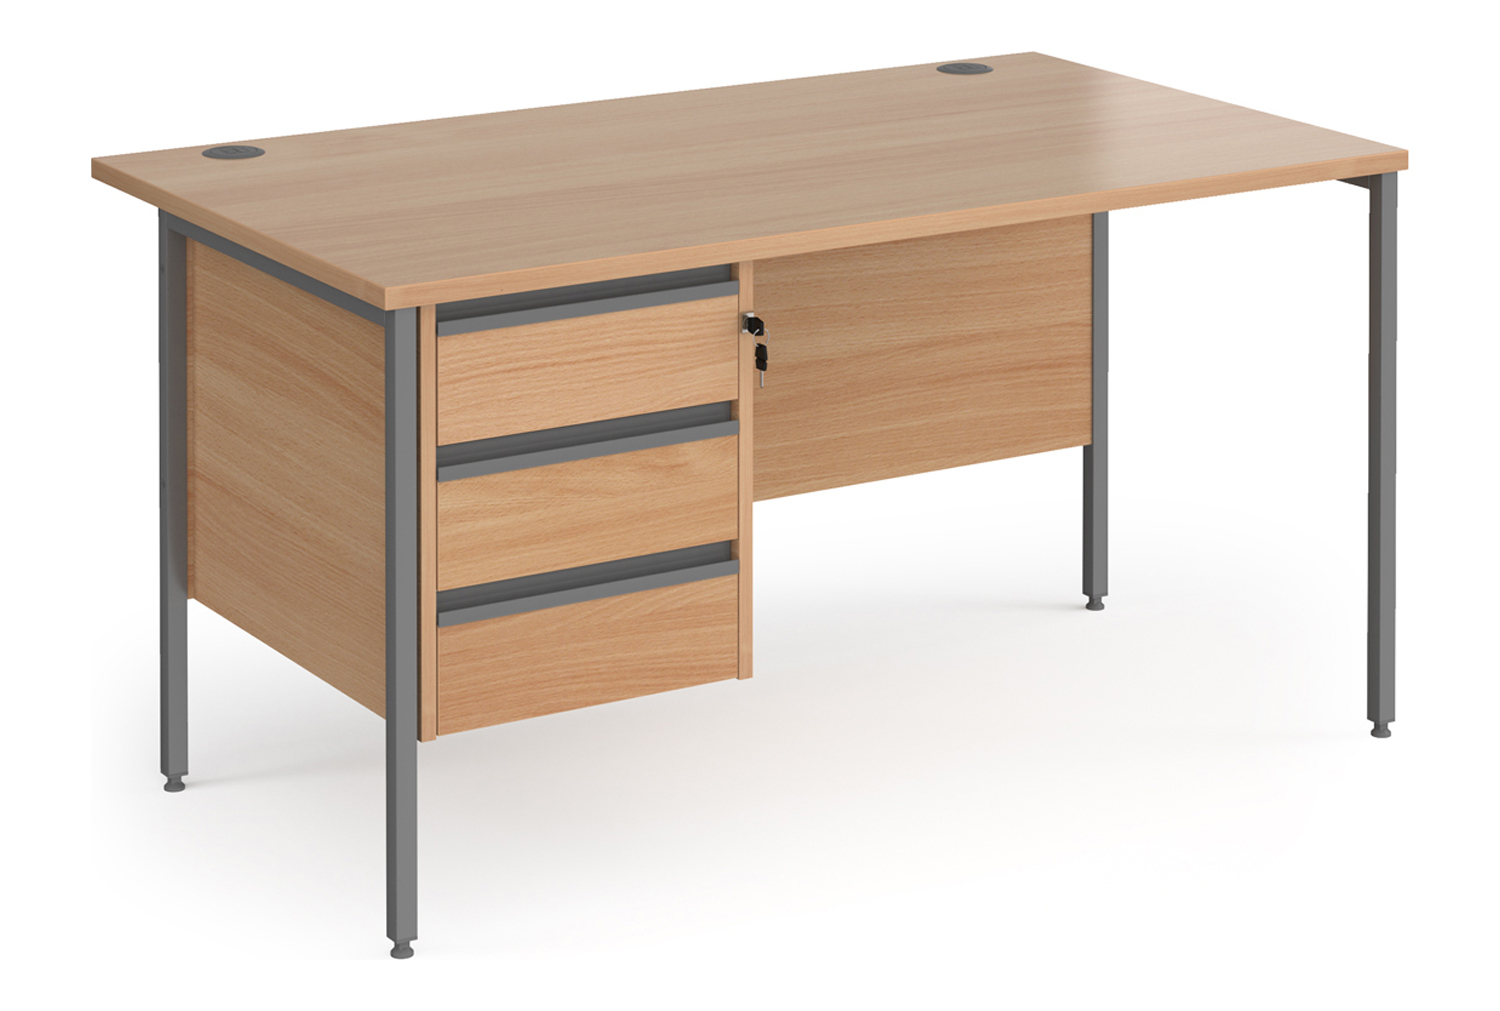 Value Line Classic+ Rectangular H-Leg Office Desk 3 Drawers (Graphite Leg), 140wx80dx73h (cm), Beech, Express Delivery